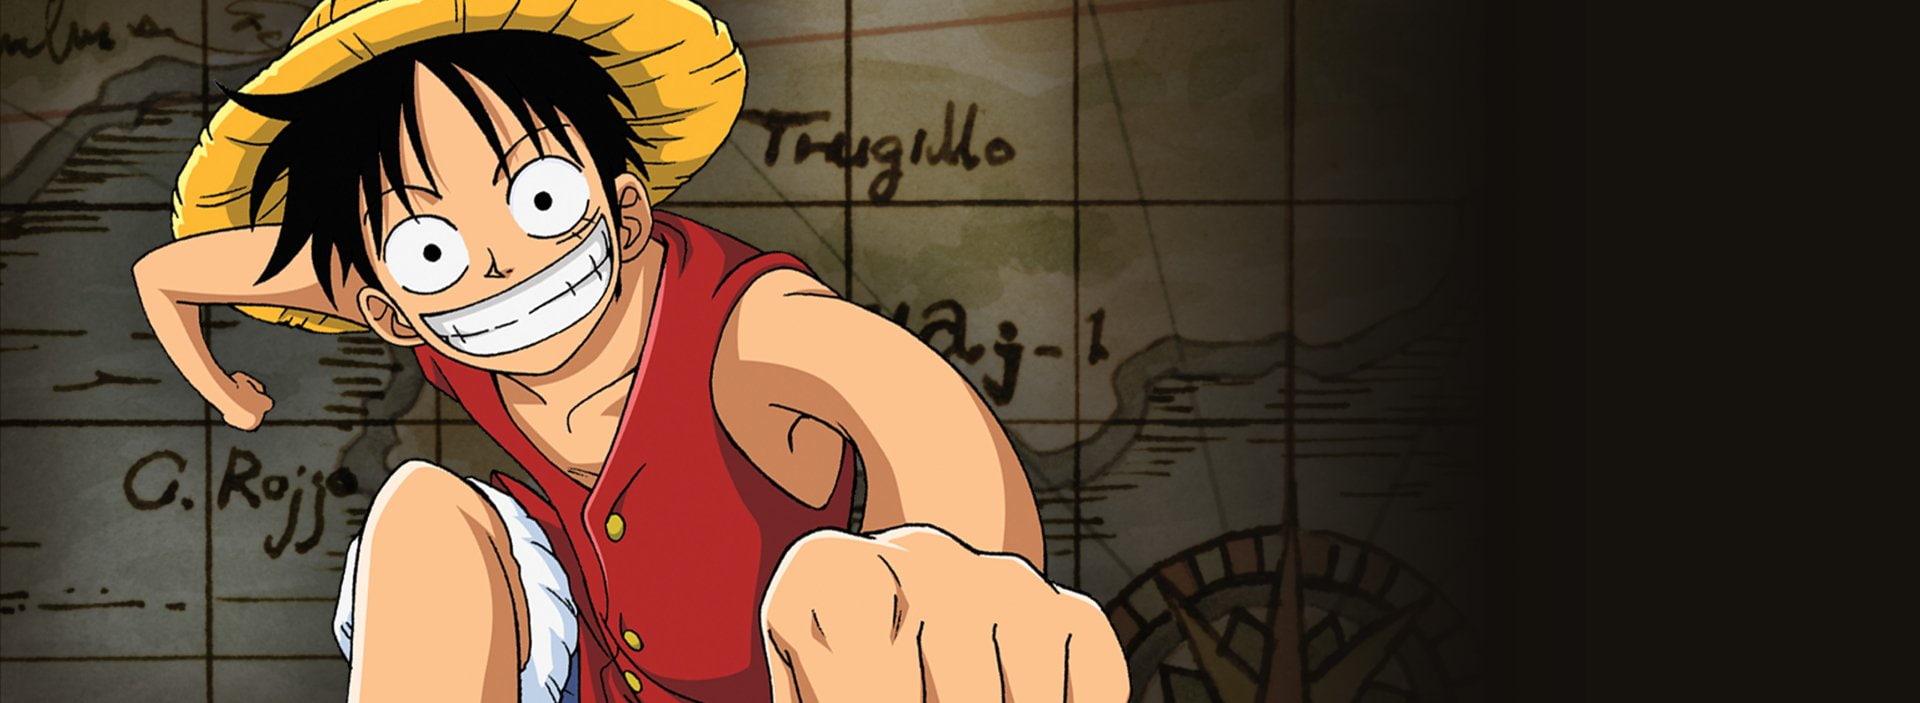 Free download | HD wallpaper: Anime, One Piece, Monkey D. Luffy ...